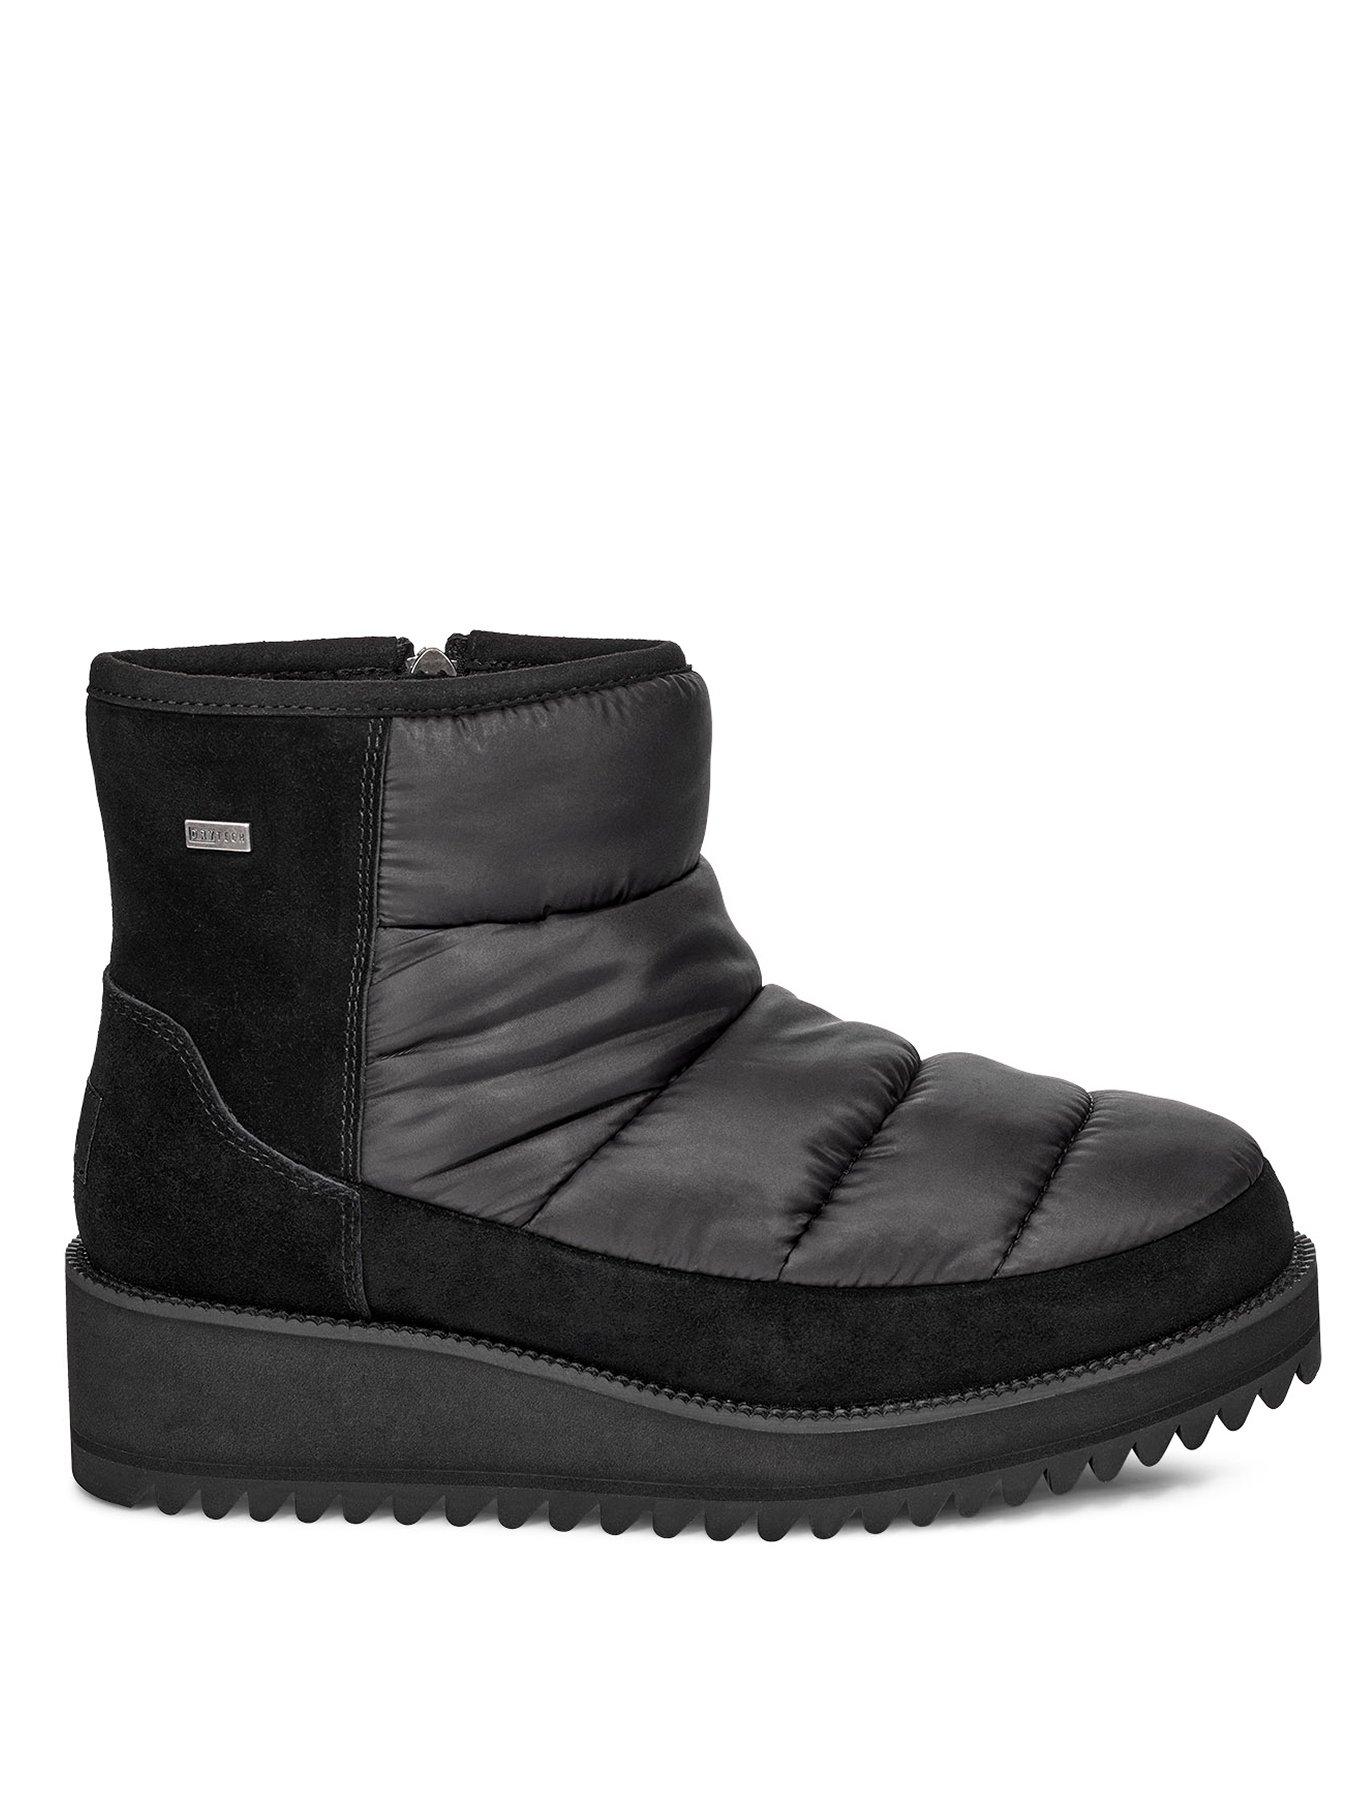 UGG Ridge Mini Ankle Boots - Black 